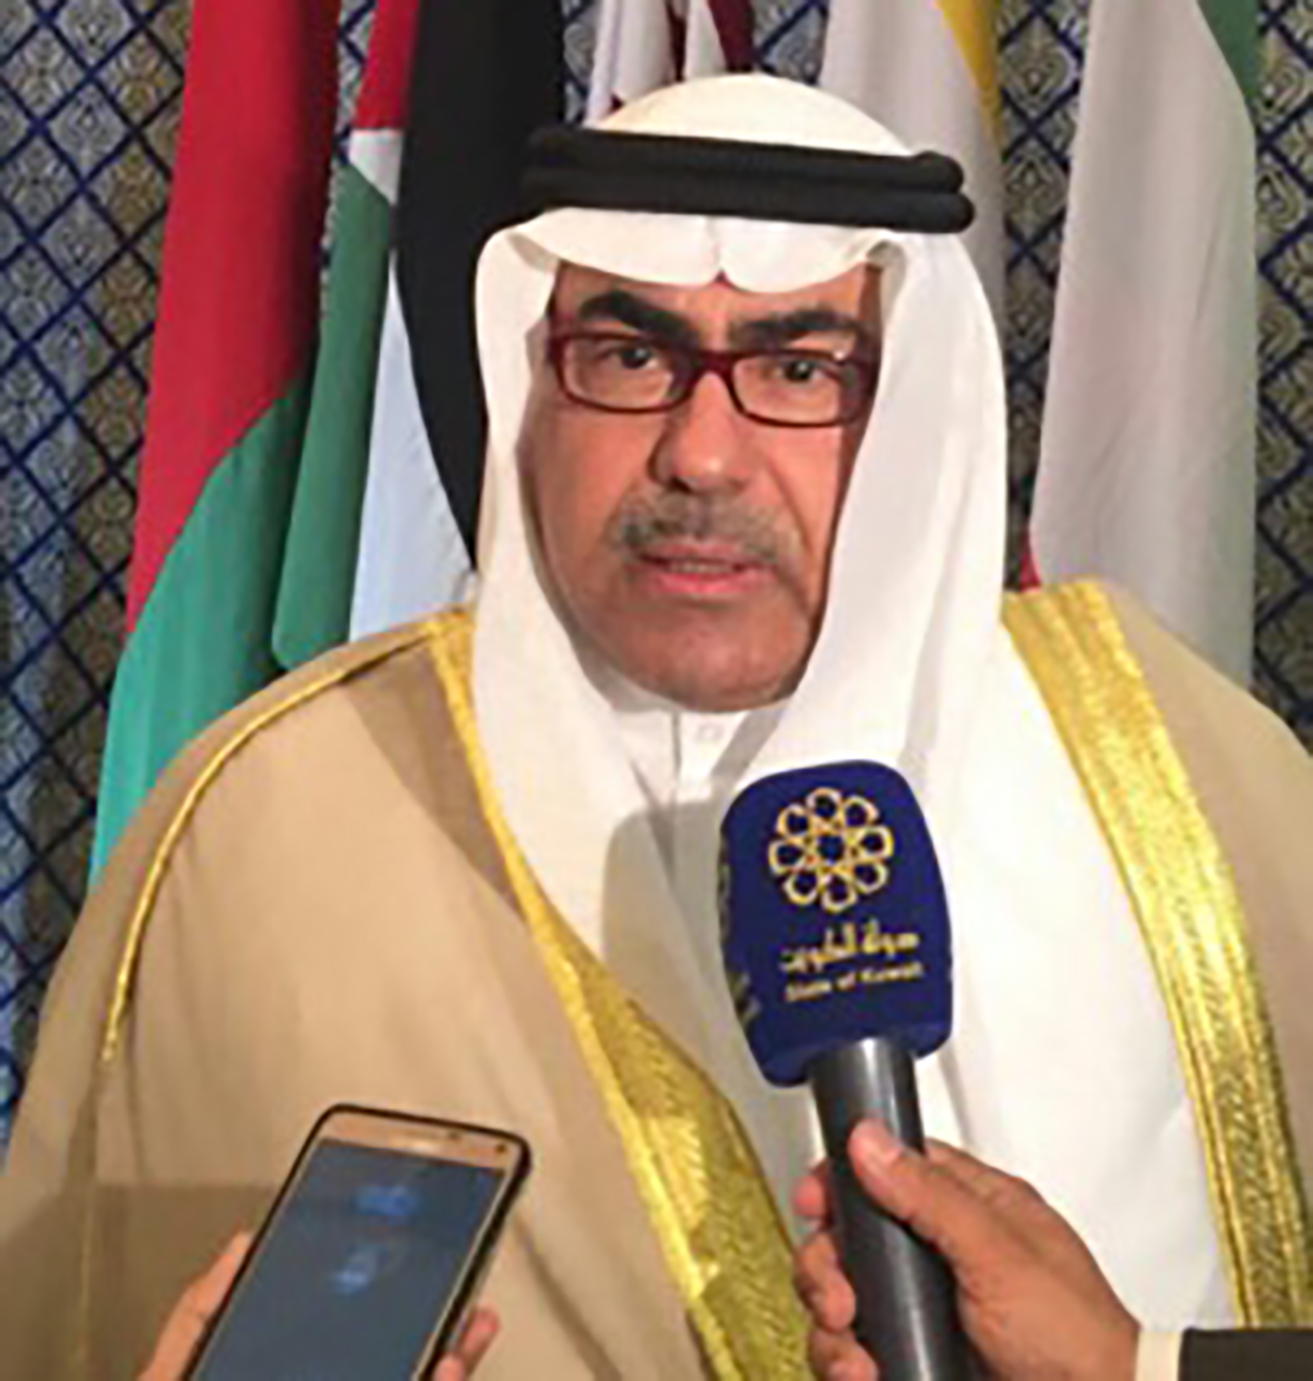 ِAssistant undersecretary for economic affairs Sulaiman Al-Abduljalil